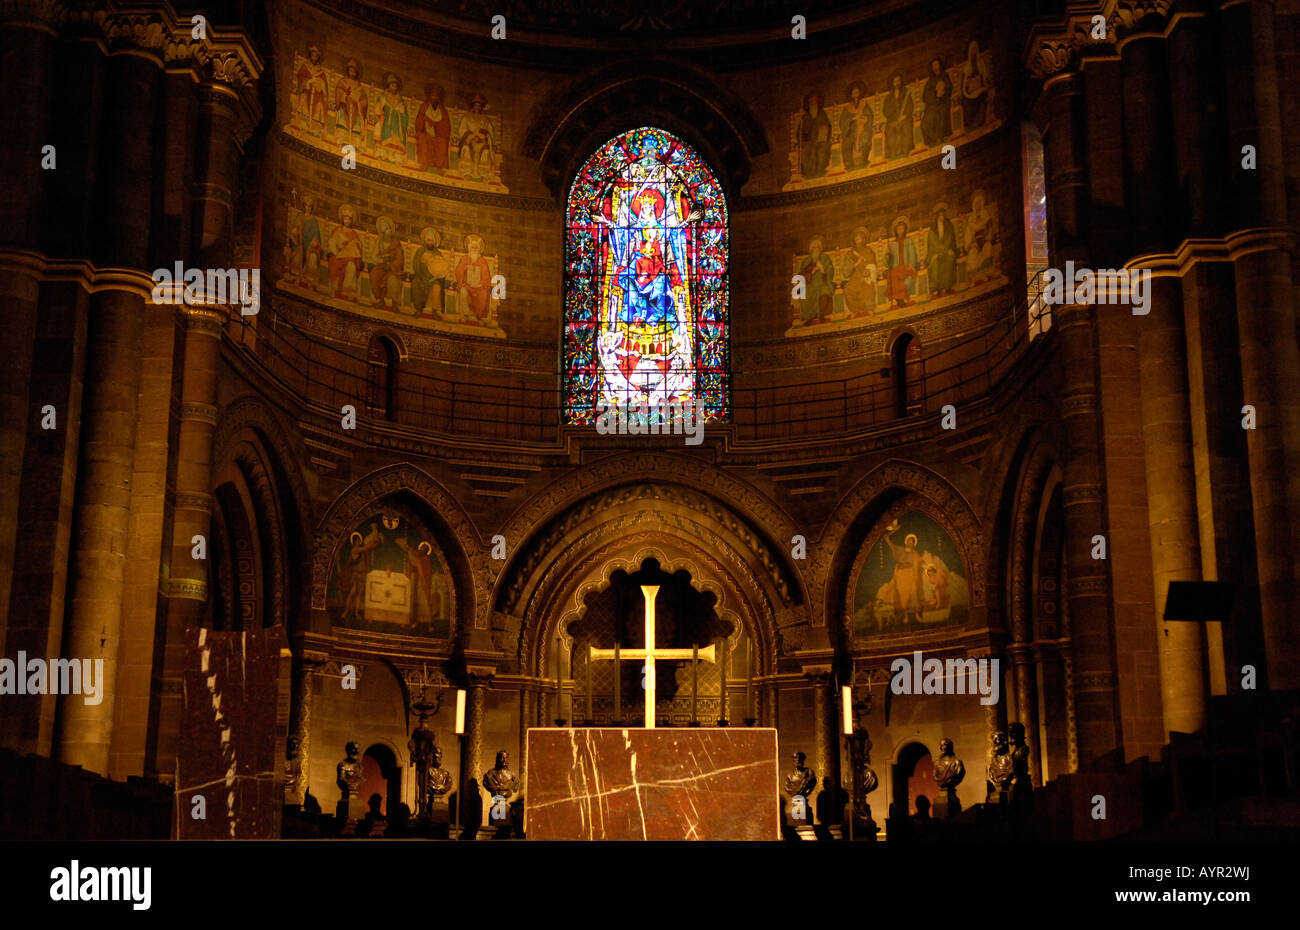 Choeur roman abside, cathédrale de Strasbourg, Strasbourg, Alsace, France Banque D'Images